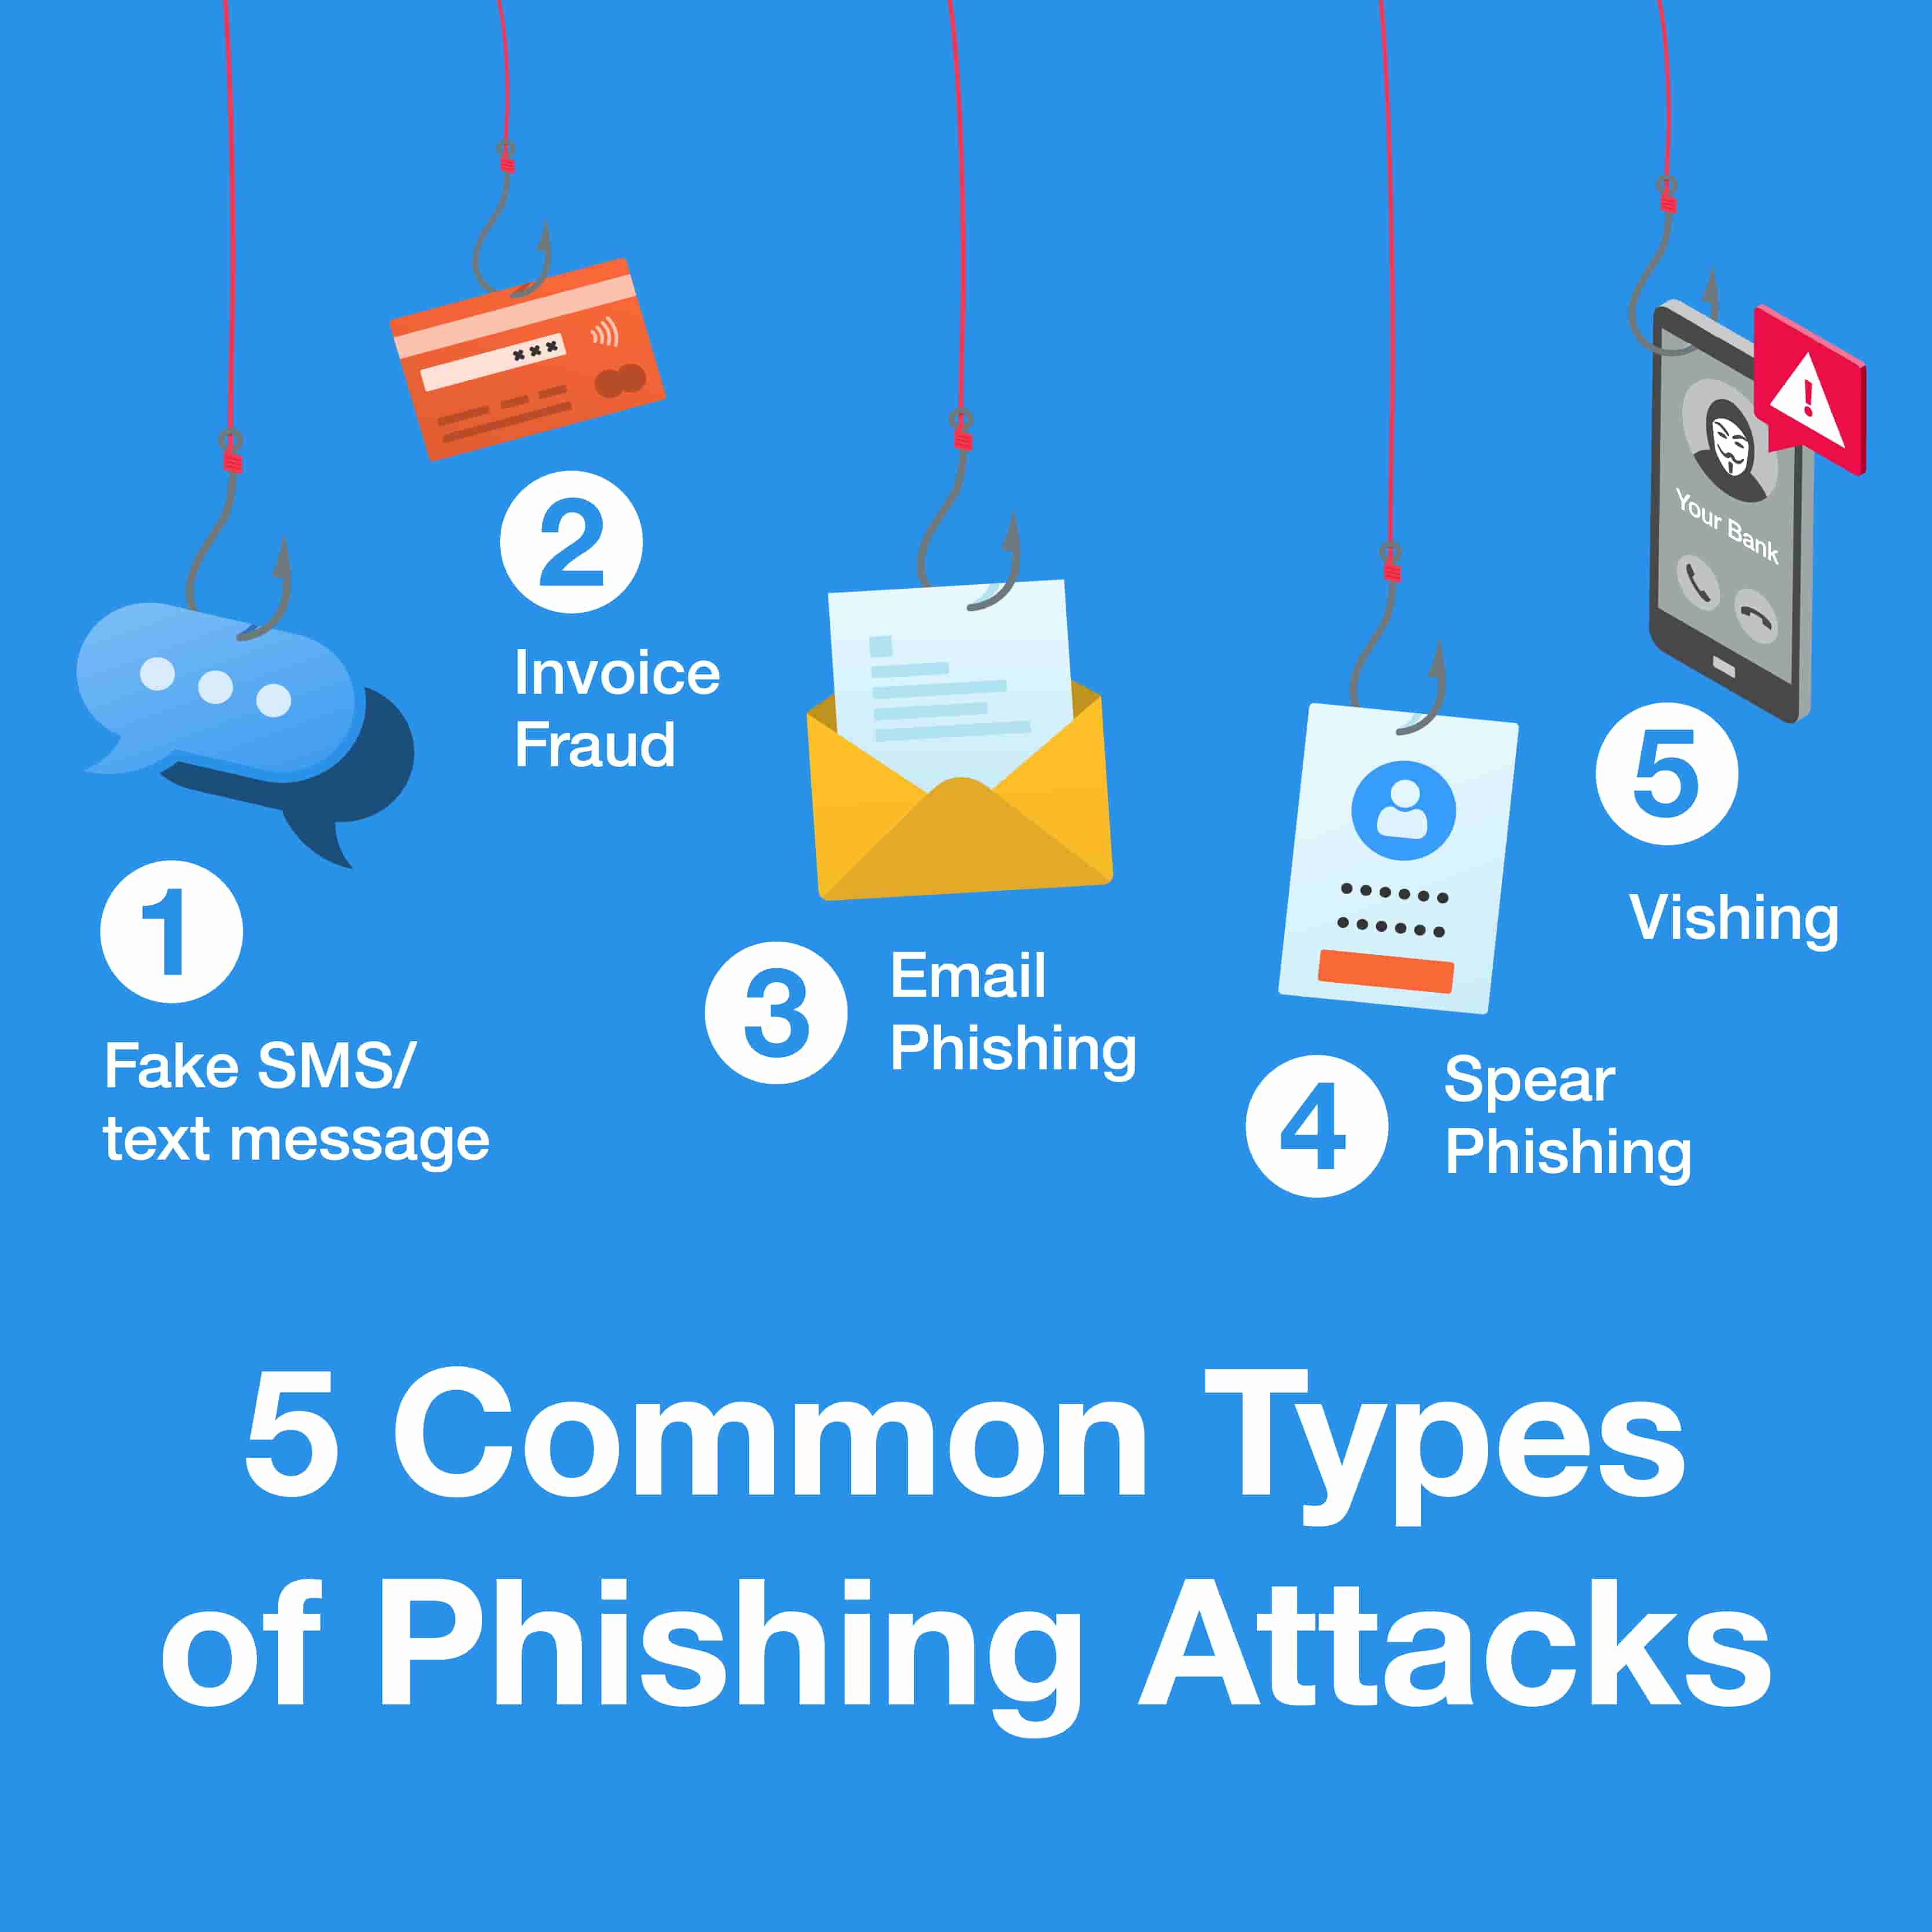 5 common types of phishing attacks infographic